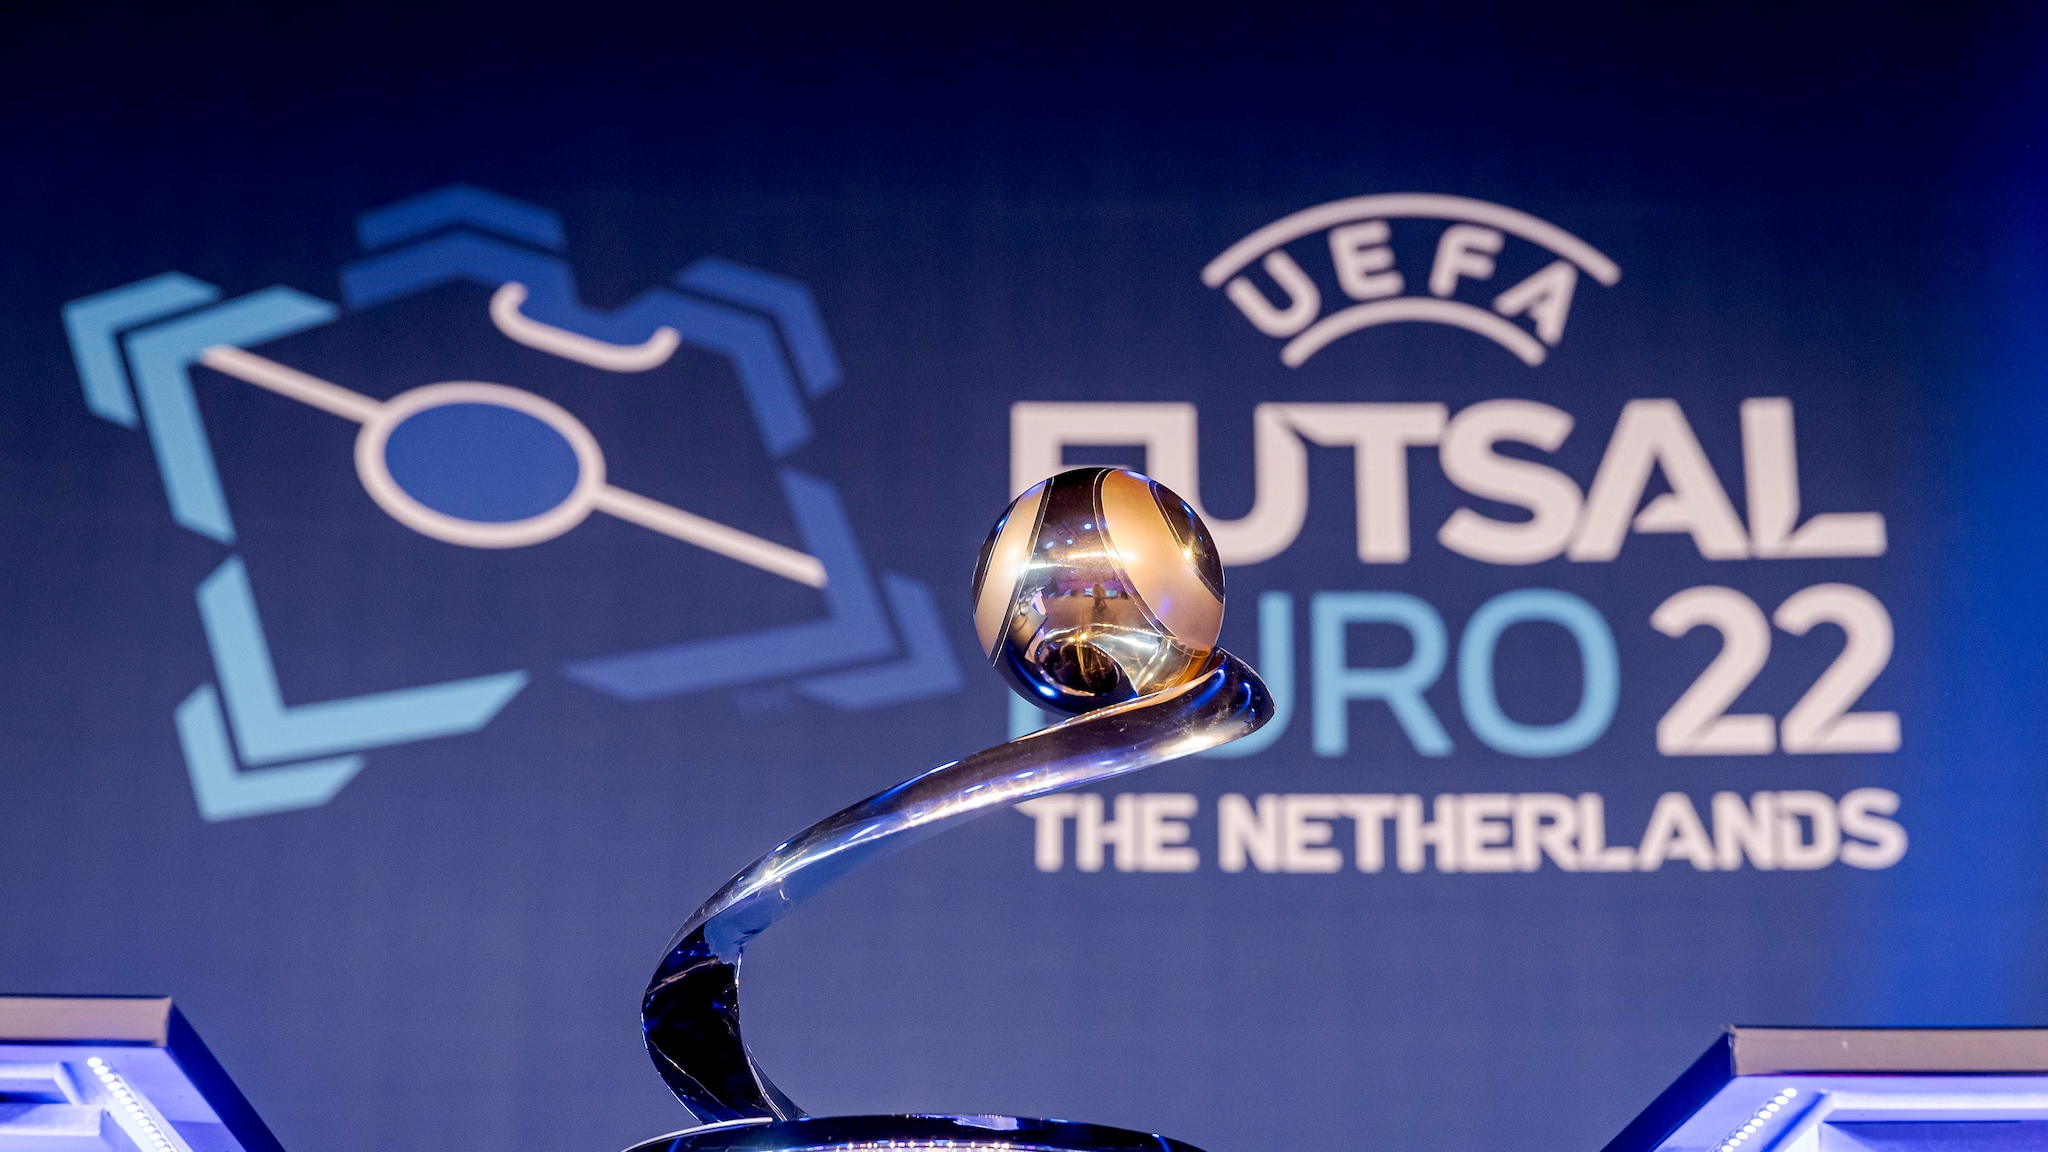 Rozpis pohára UEFA Futsal Cup 2022 |  EURO. Futsal